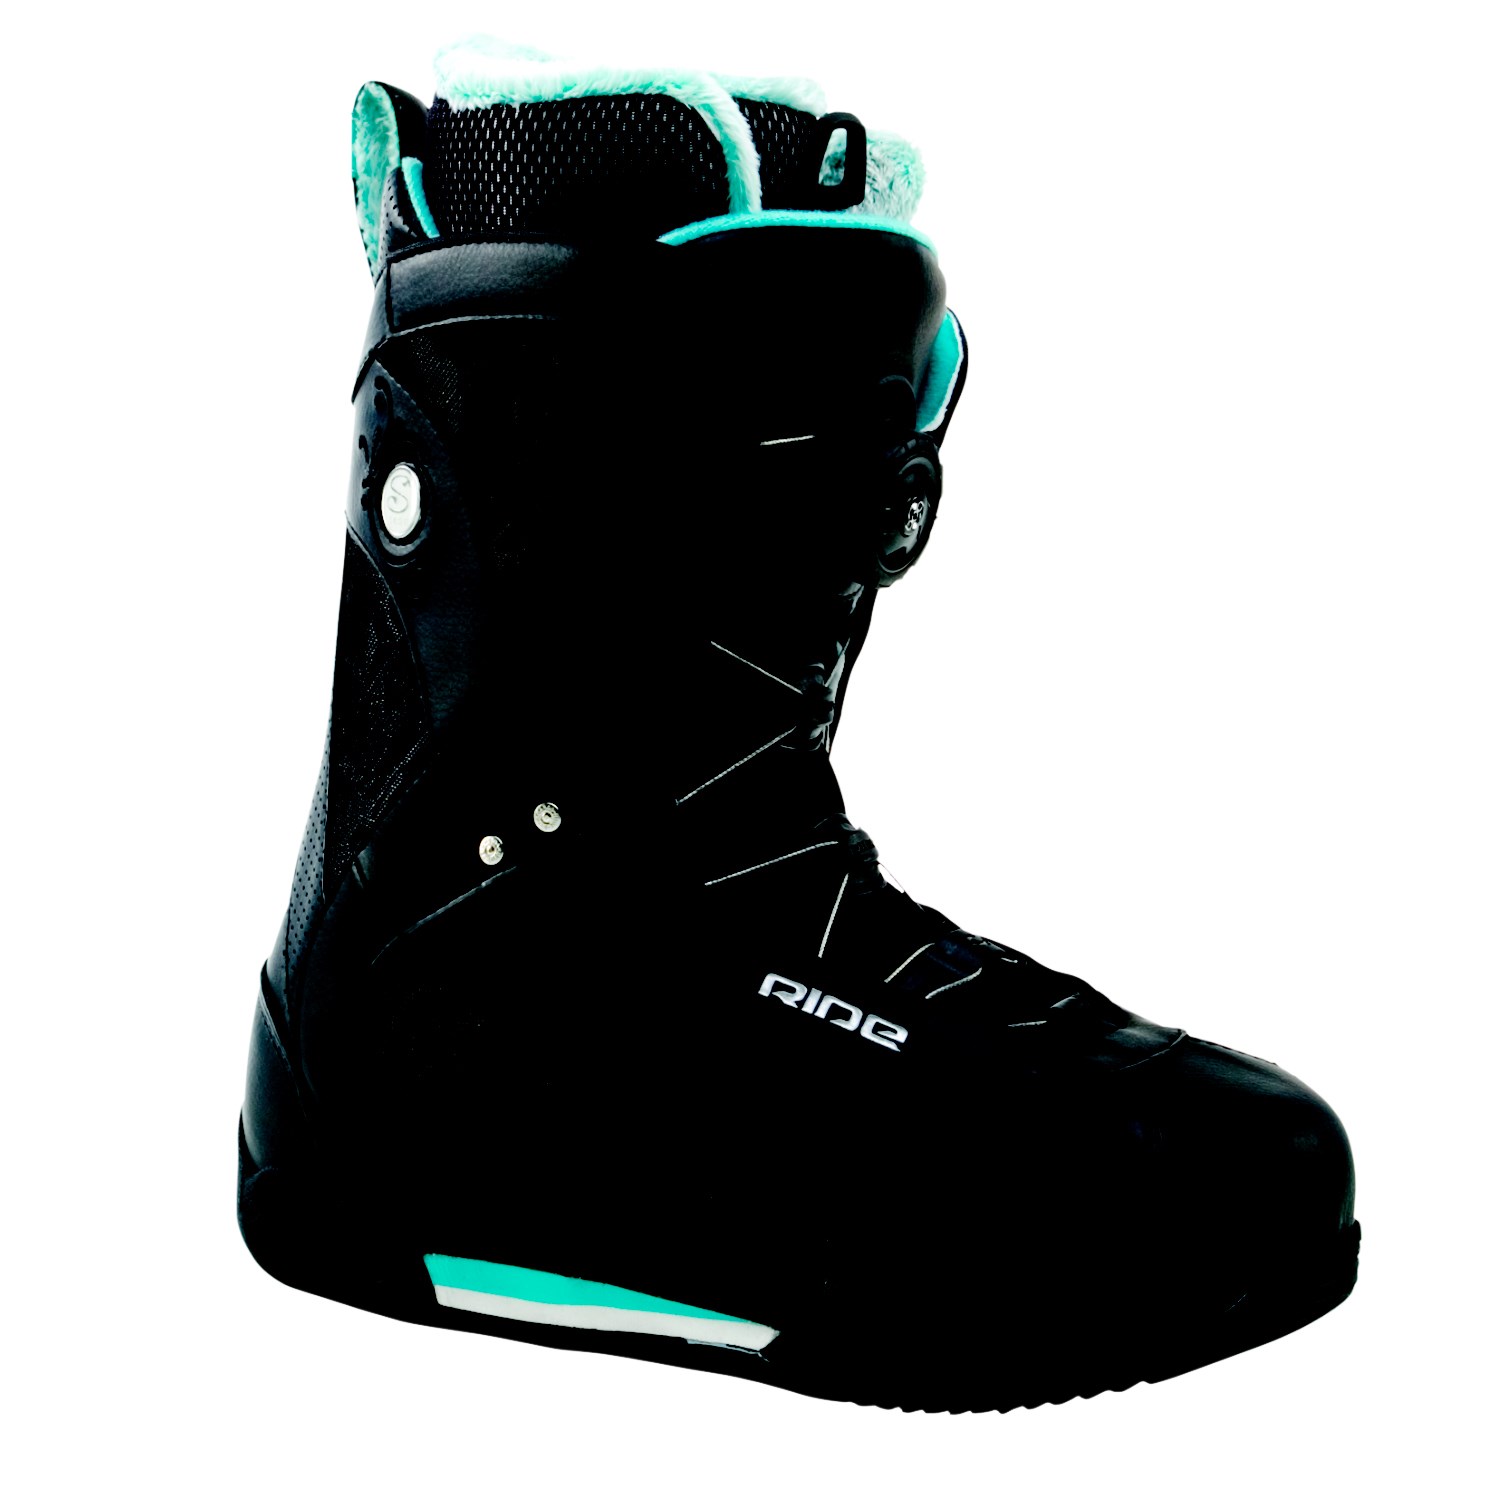 Ride Sage Boa Snowboard Boots - Women's 2010 | evo